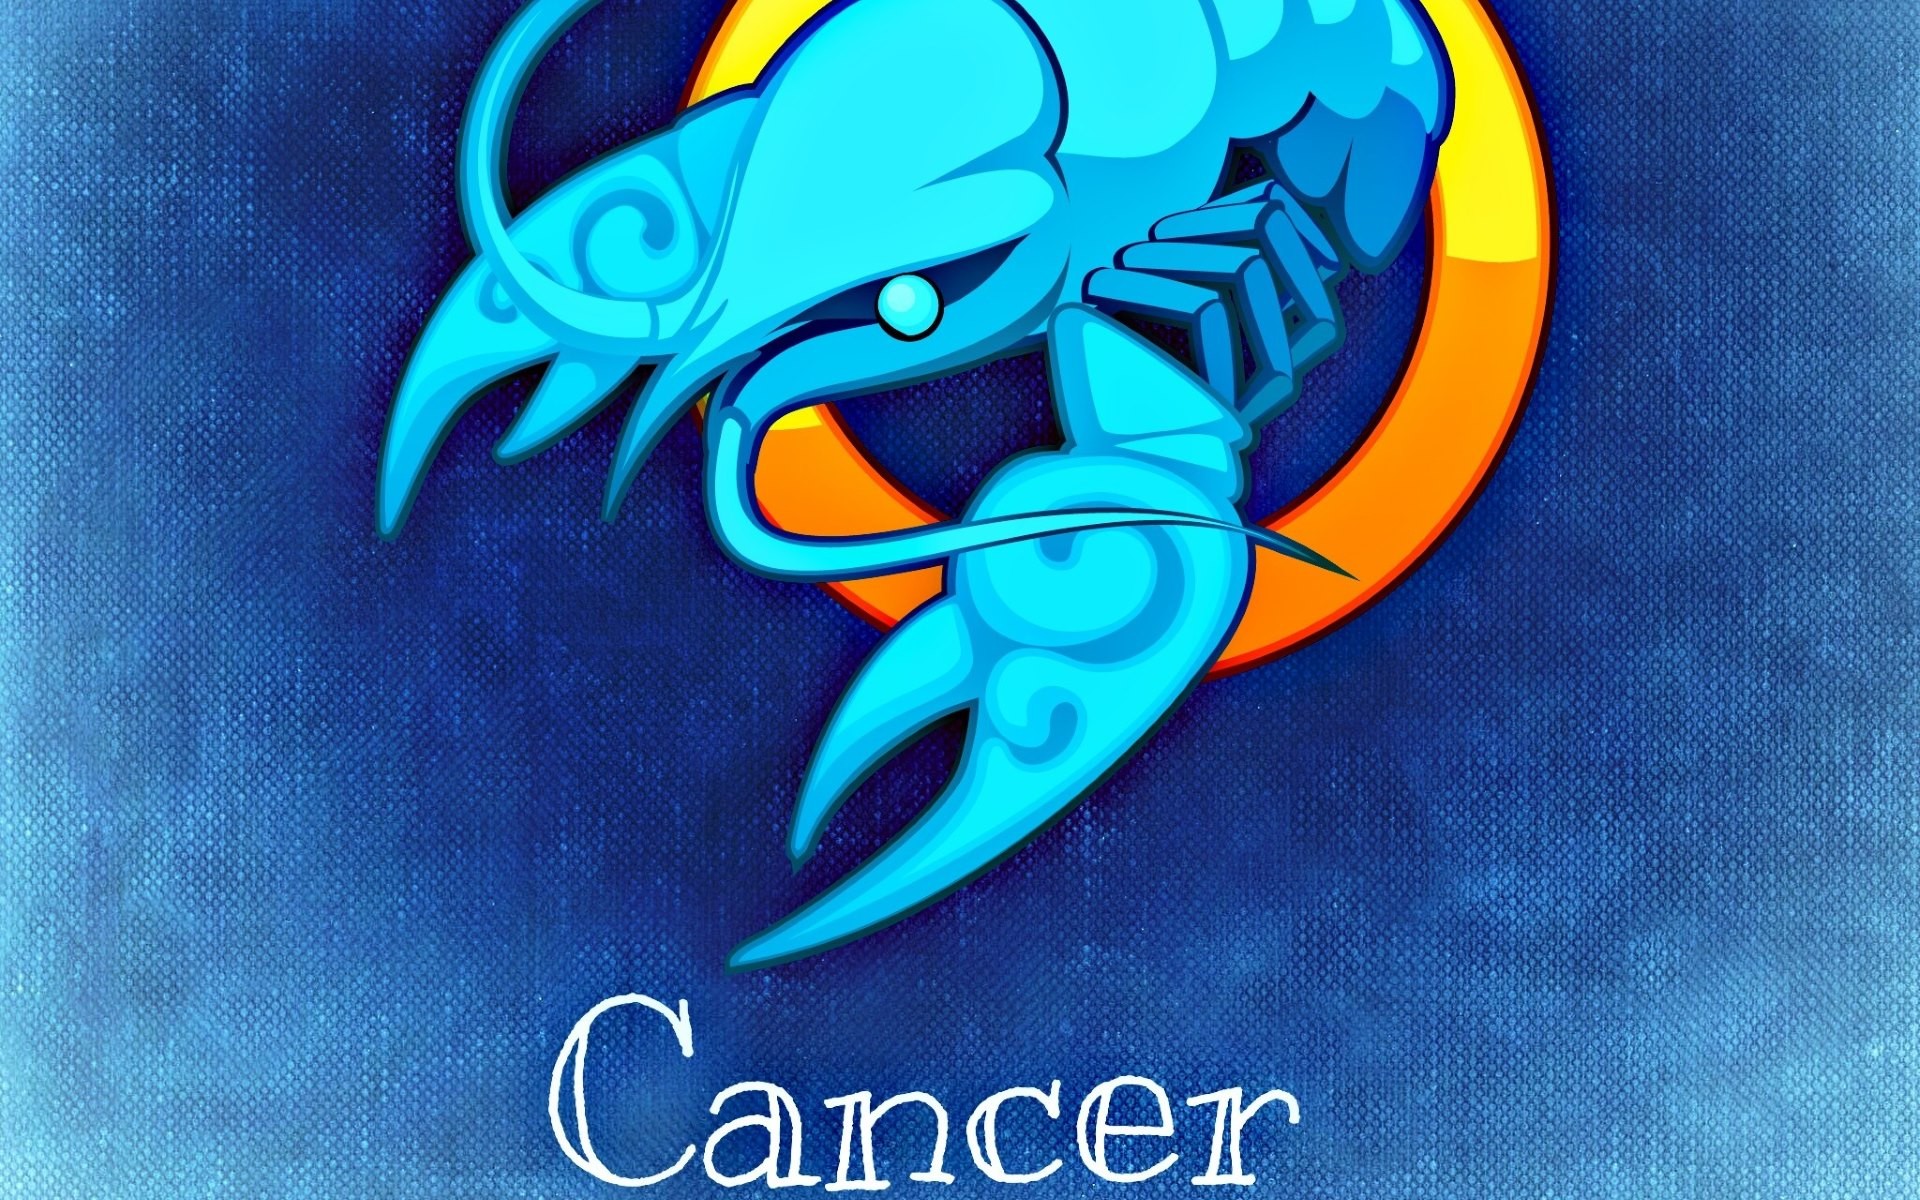 1920x1200 Wallpaper: Horoscope - Cancer. Widescreen Desktop / Macbook 